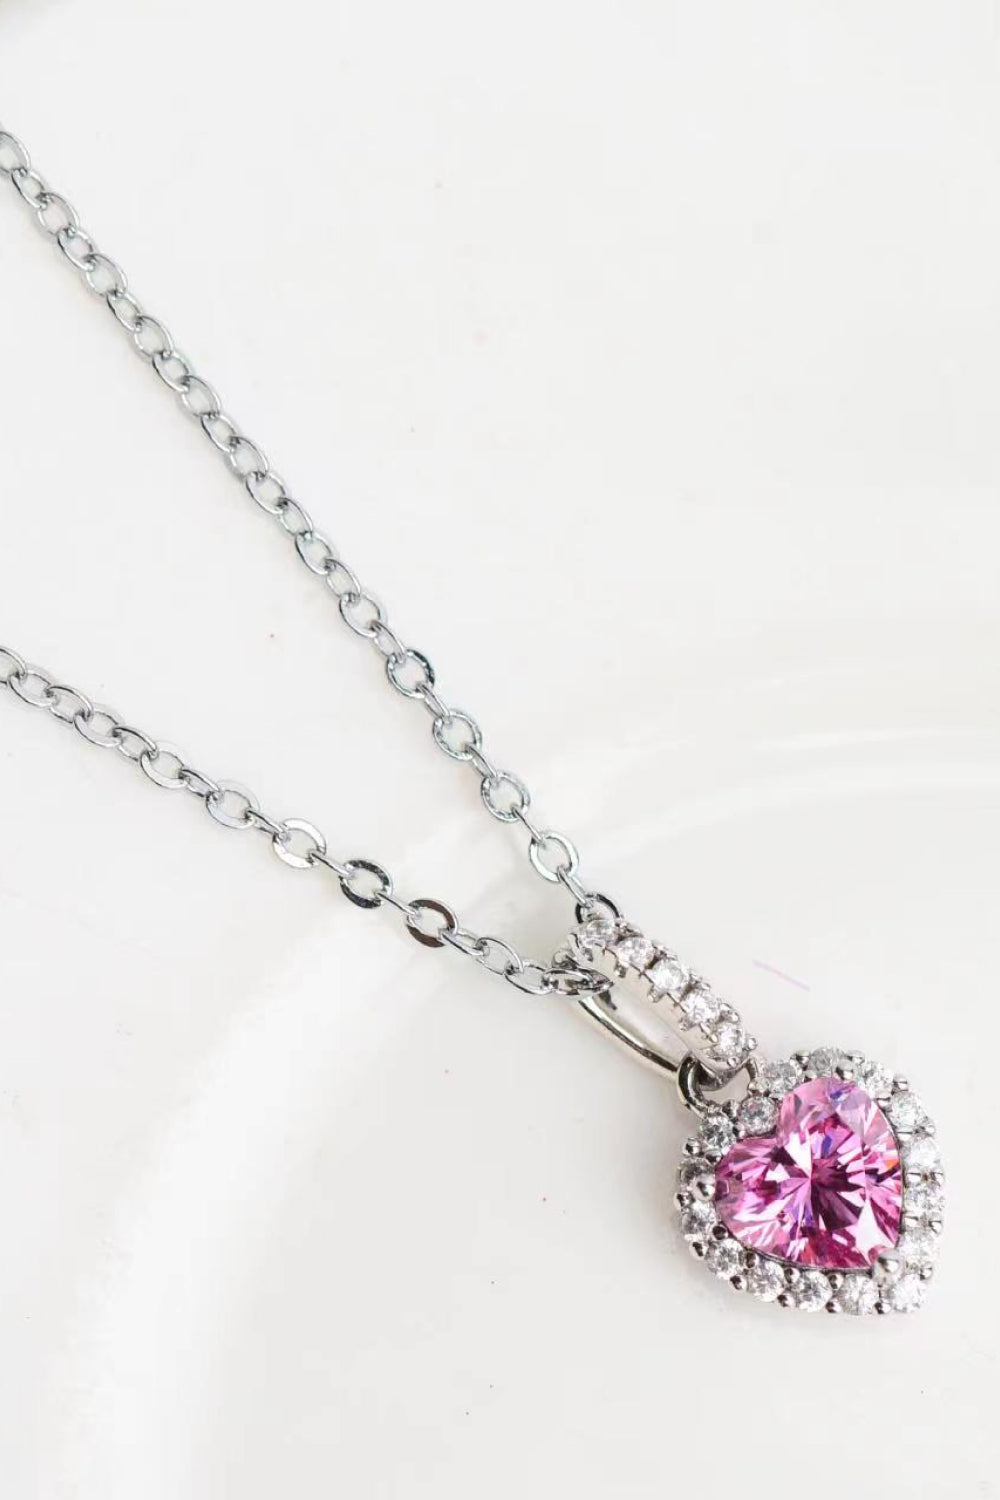 1 Carat Moissanite Heart Pendant Necklace - GlamZation